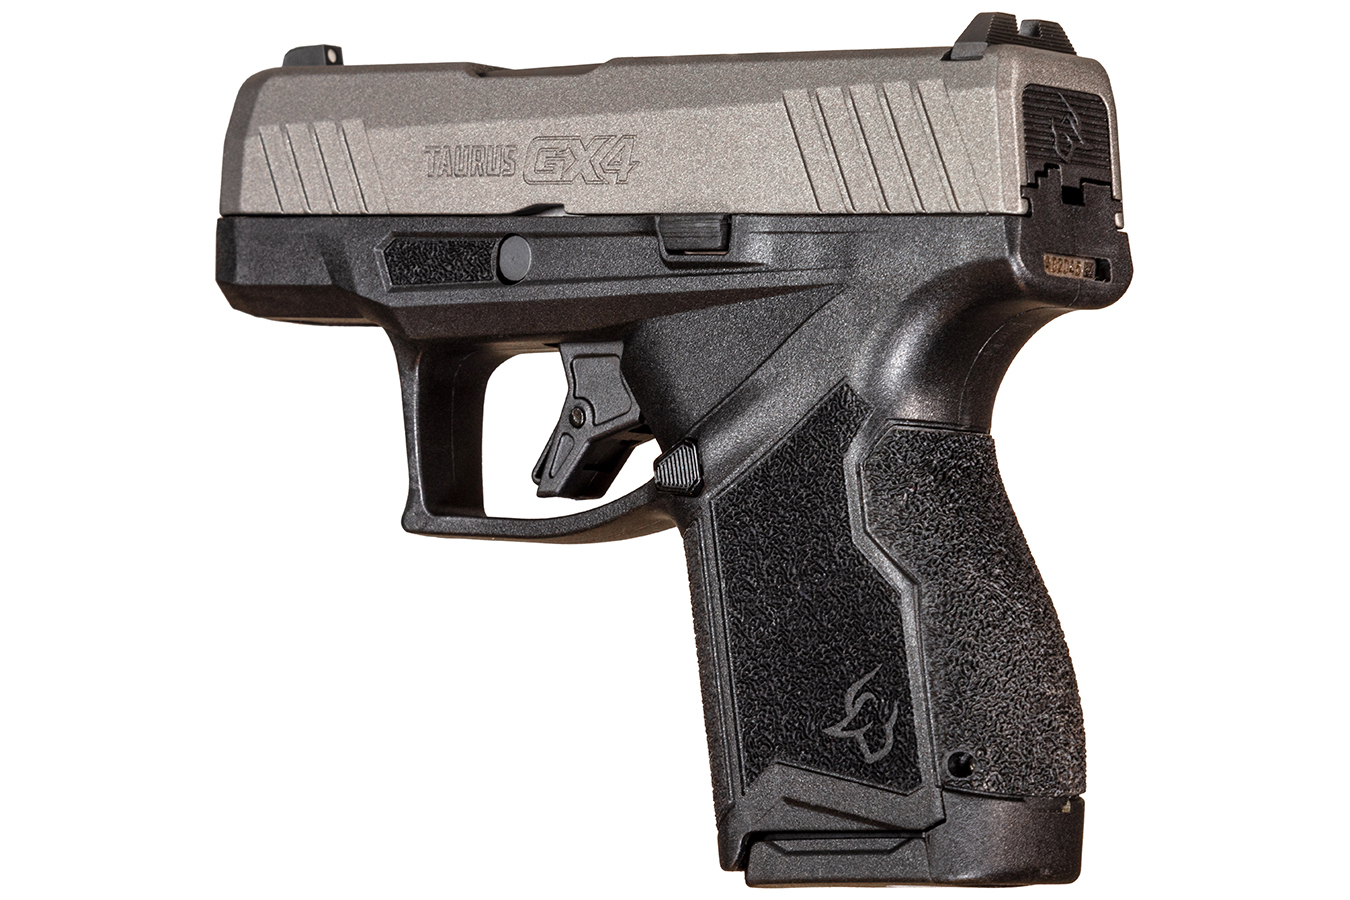 taurus-gx4-sub-compact-pistol-w-2-magazines-249-99-rebate